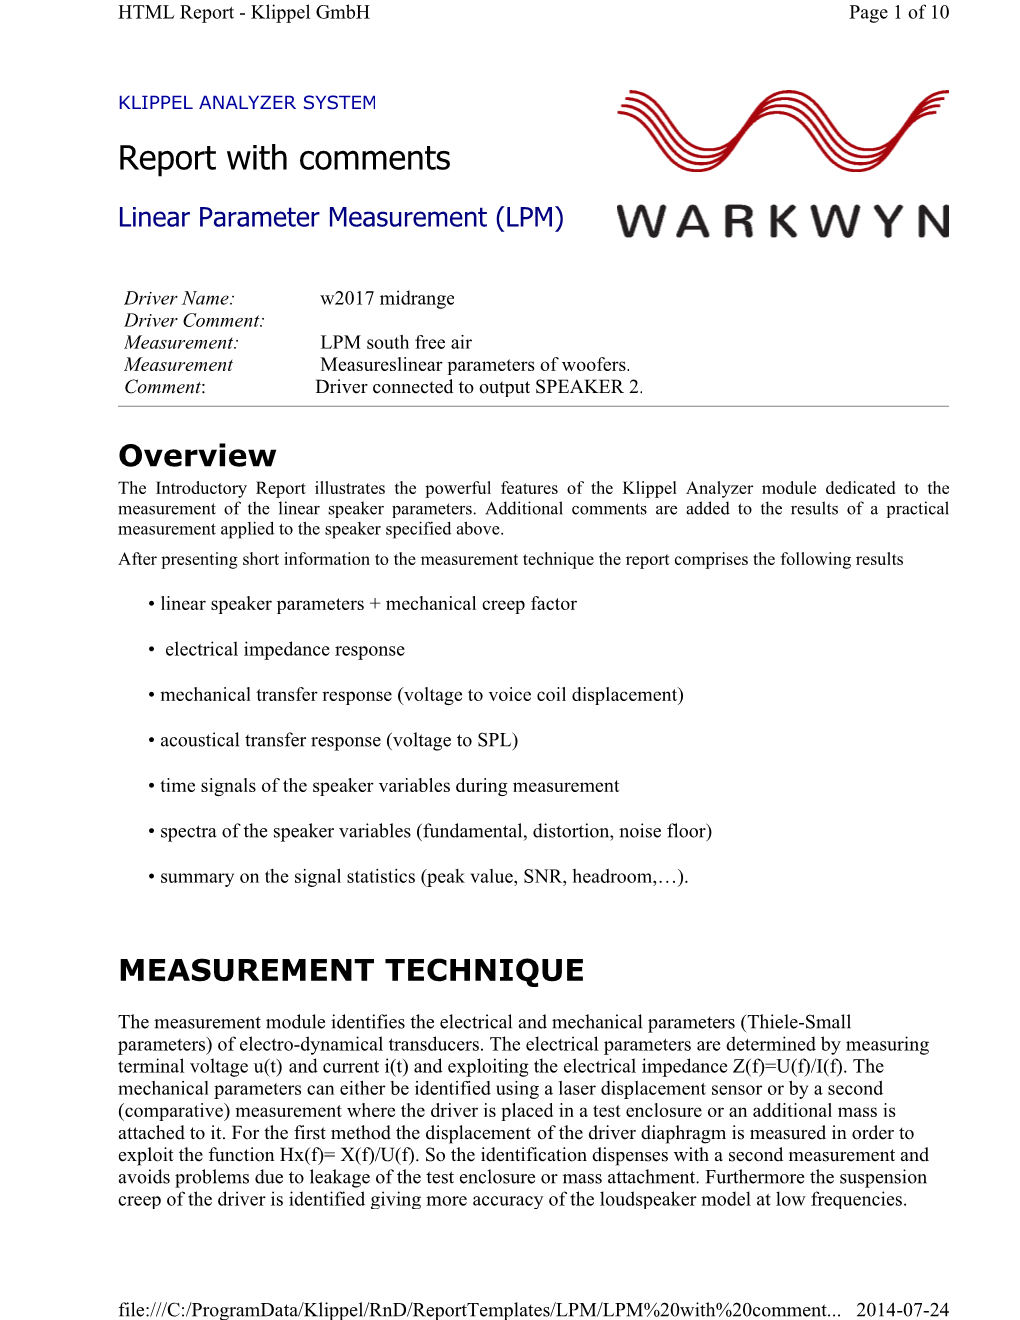 LPM Woofer Sample Report